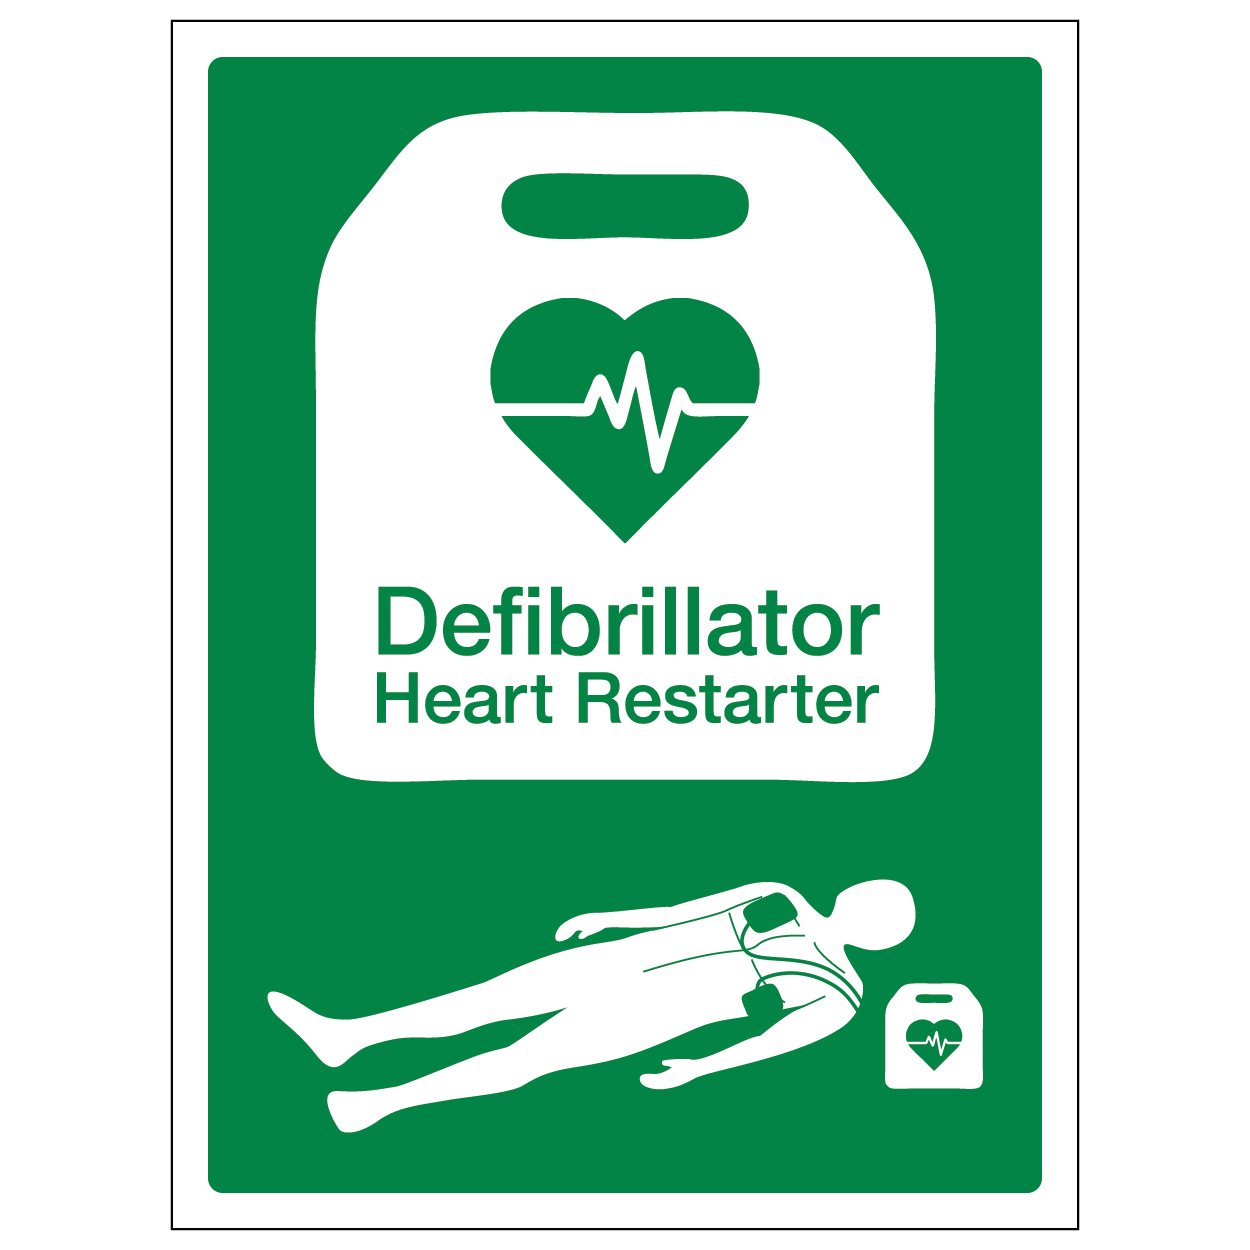 638101616330413683_defibrillator-heart-restarter_web.png